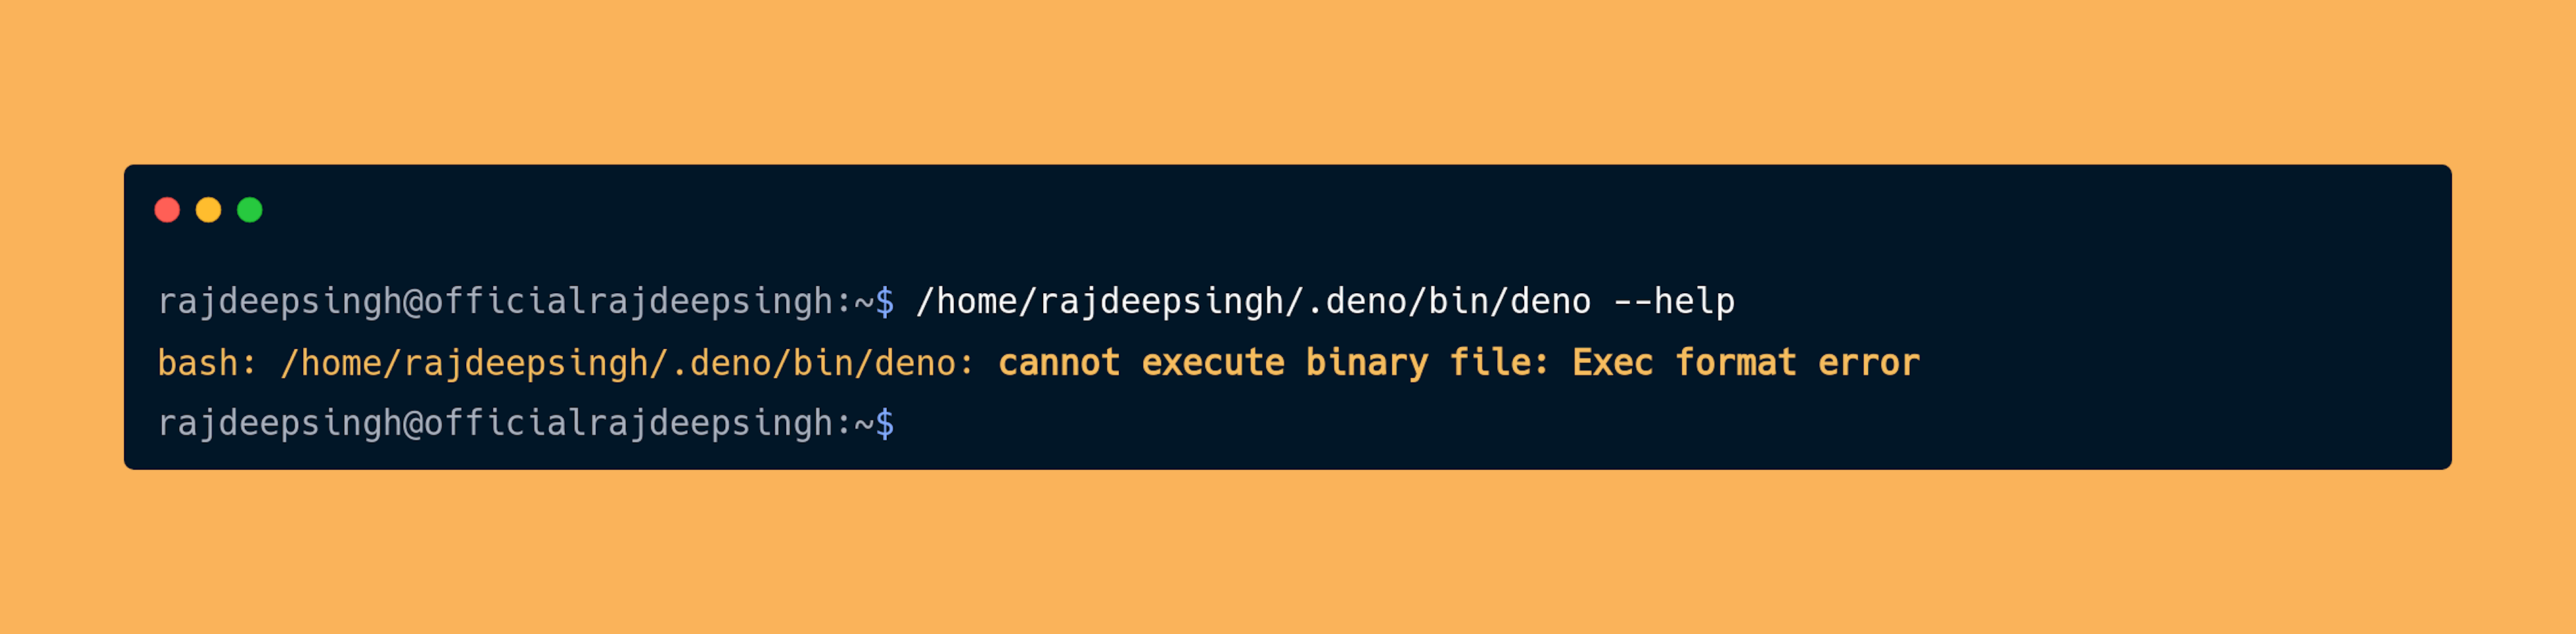 Deno cannot execute binary file: Exec format error in Raspberry pi